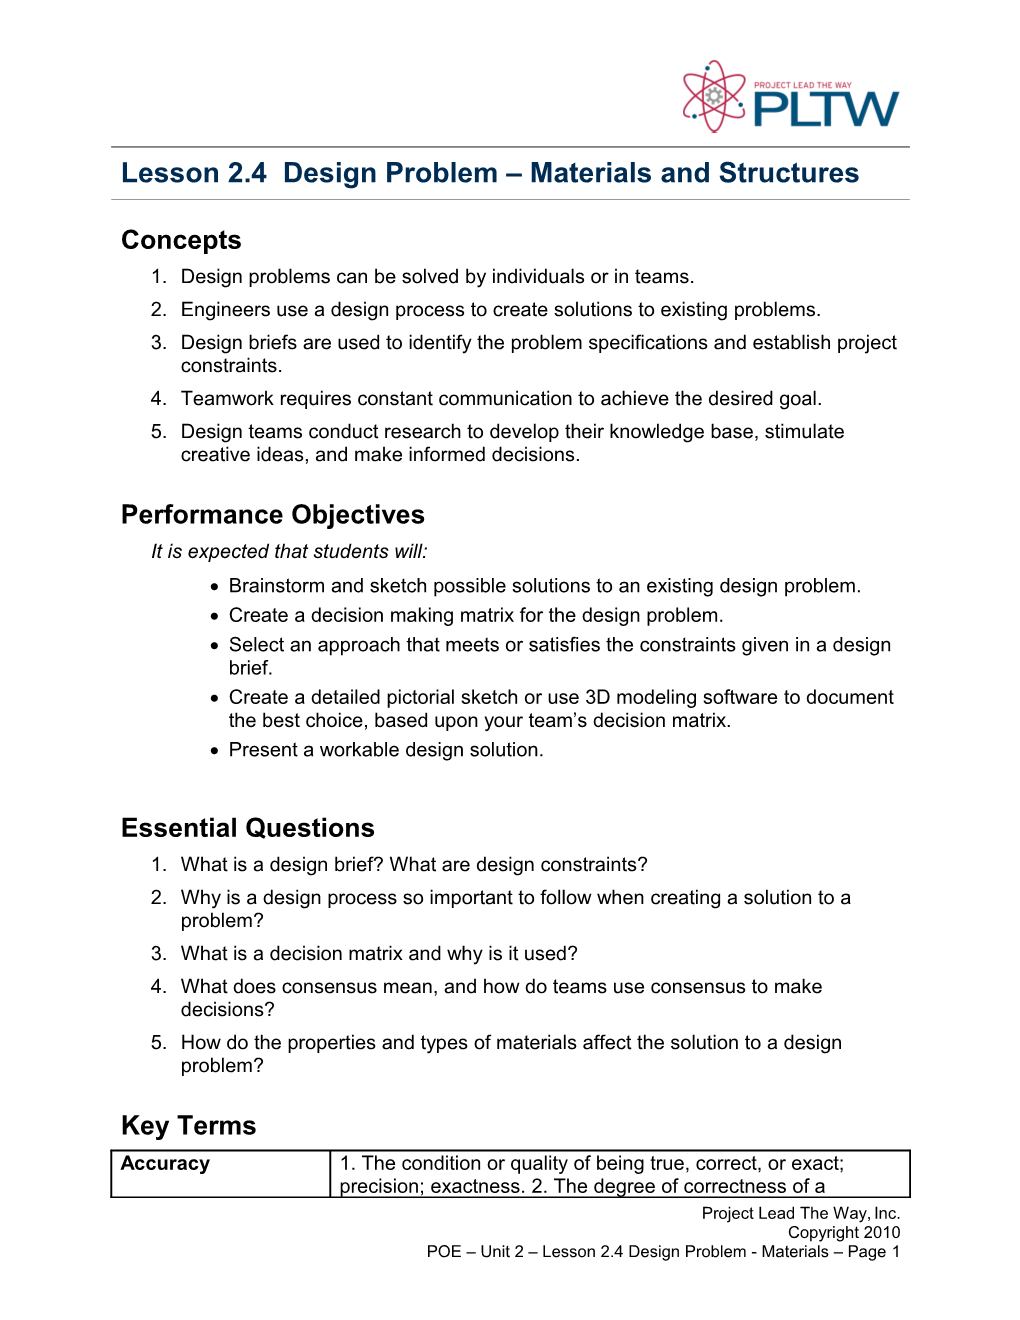 Lesson 2.4 Design Problem - Materials